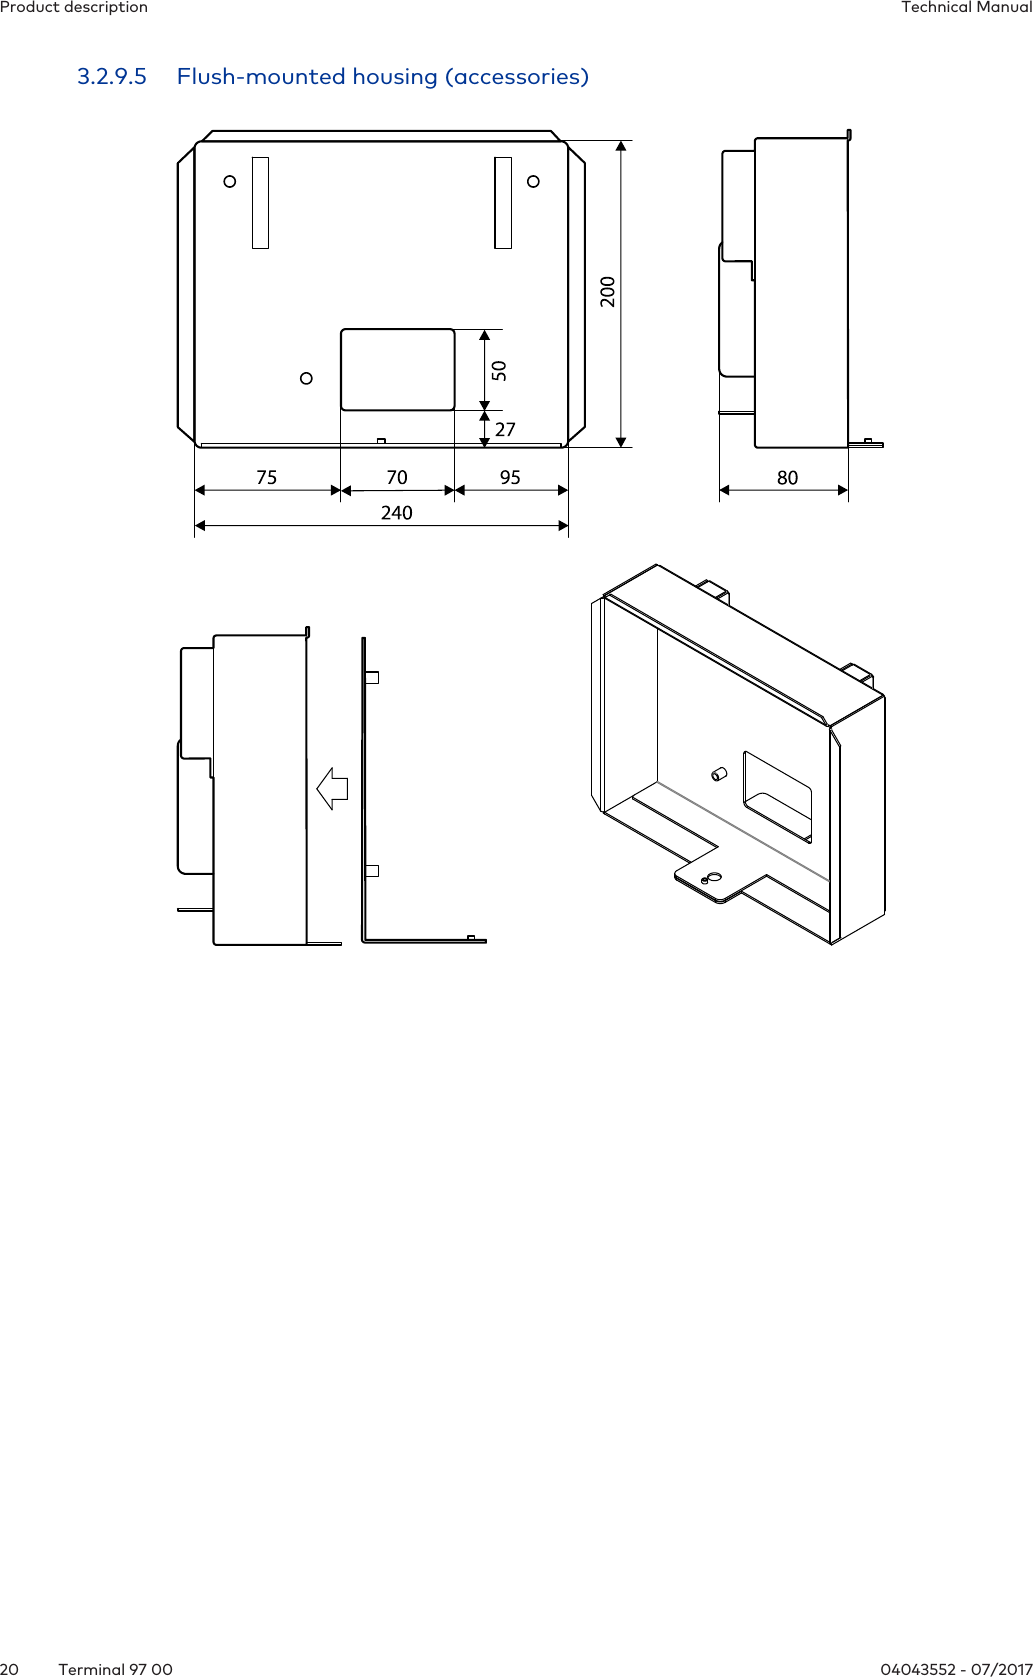 Product description Technical Manual20 04043552 - 07/2017Terminal 97 003.2.9.5 Flush-mounted housing (accessories)